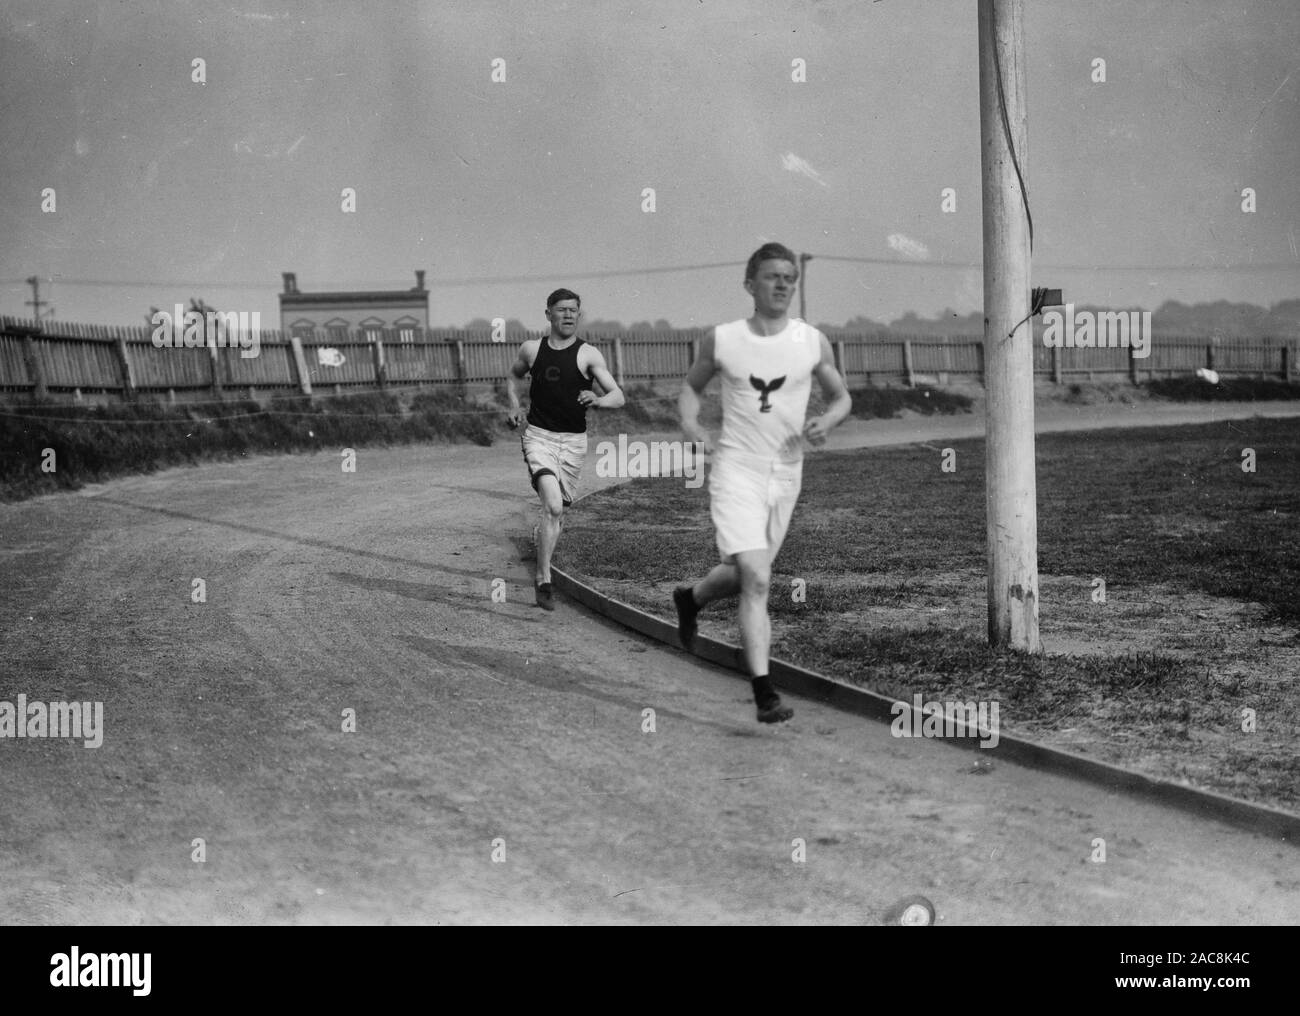 Thorpe e McGloughlin - Mostra fotografica di American Indian atleta Jim Thorpe (1888-1953) con un altro uomo, eventualmente McLaughlin, sulla via al Celtic Park nel Queens, a New York City, circa 1910 Foto Stock